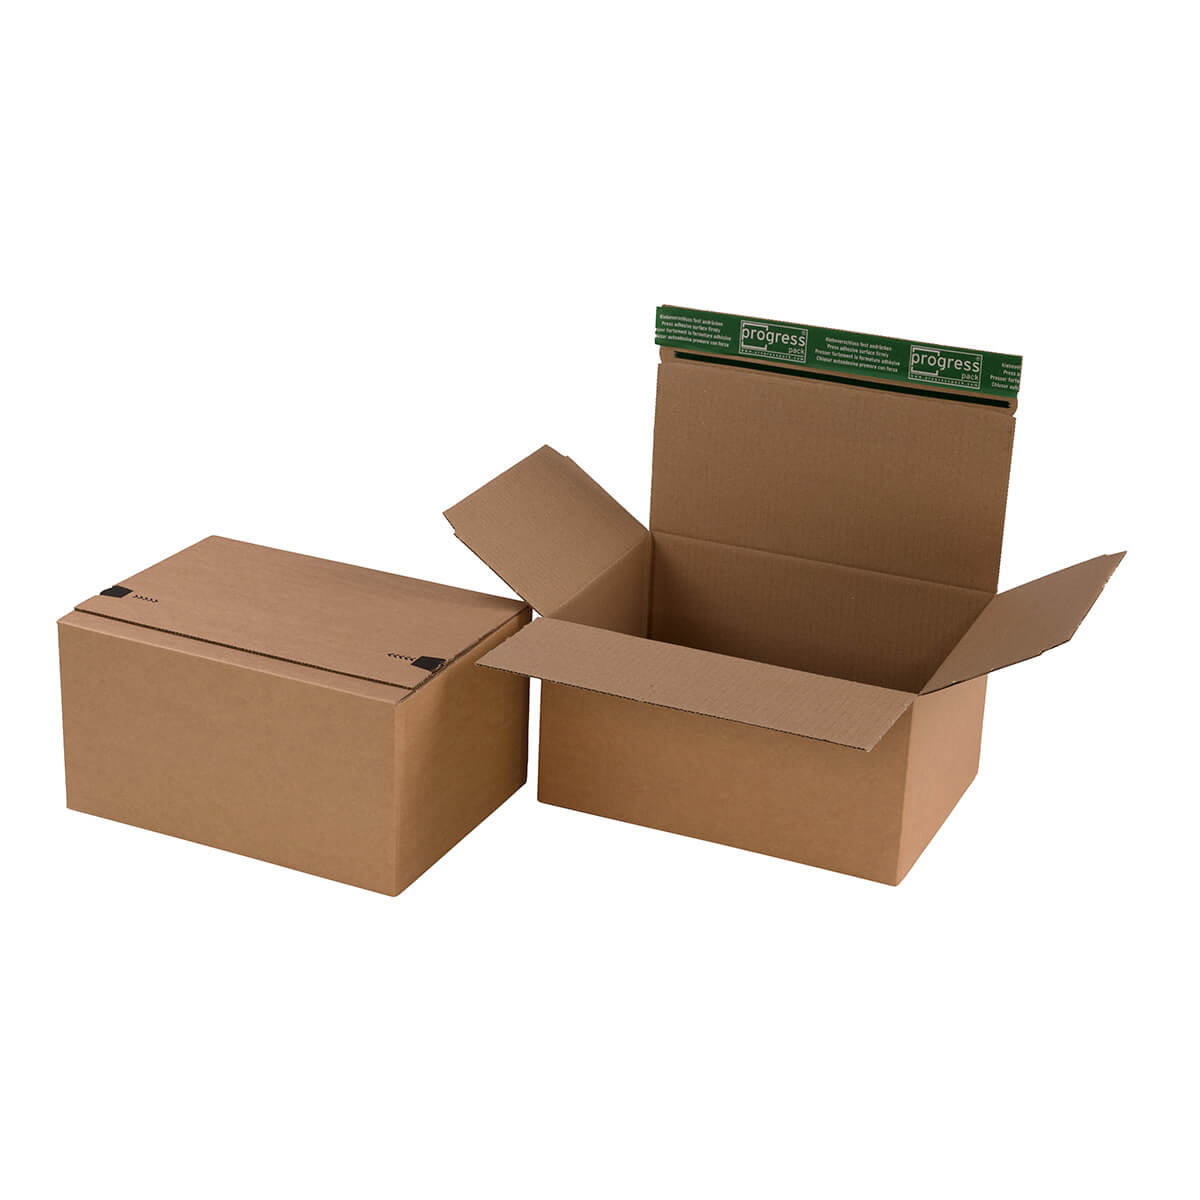 Folding carton 1-wall 310x230x160 mm din a4+ self-adhesive + tear strip - progressPACK